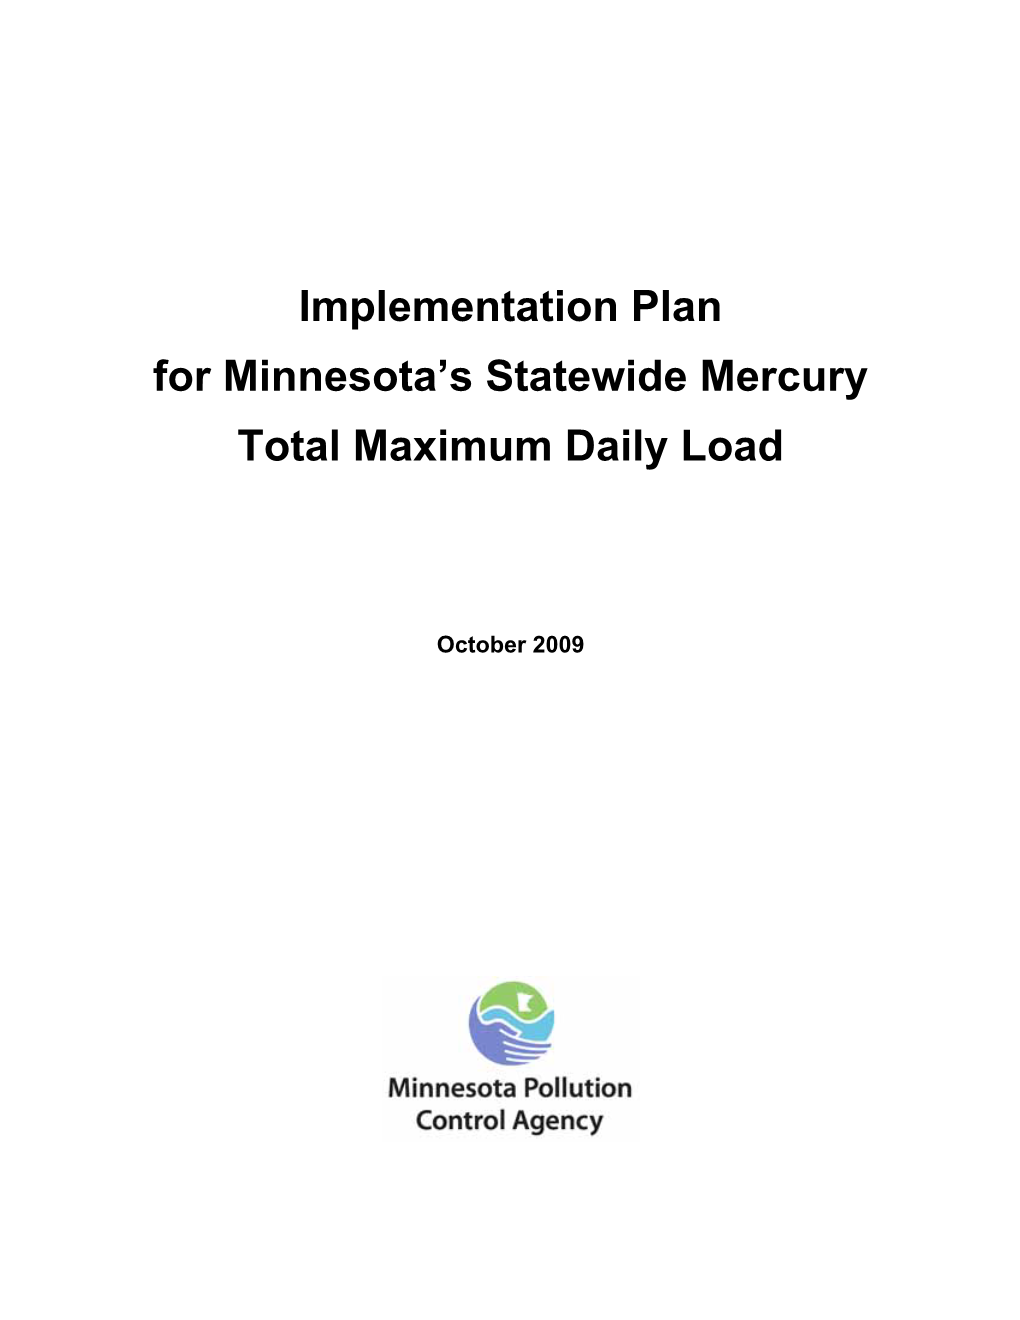 Minnesota's Statewide Mercury TMDL. This Implementation Plan